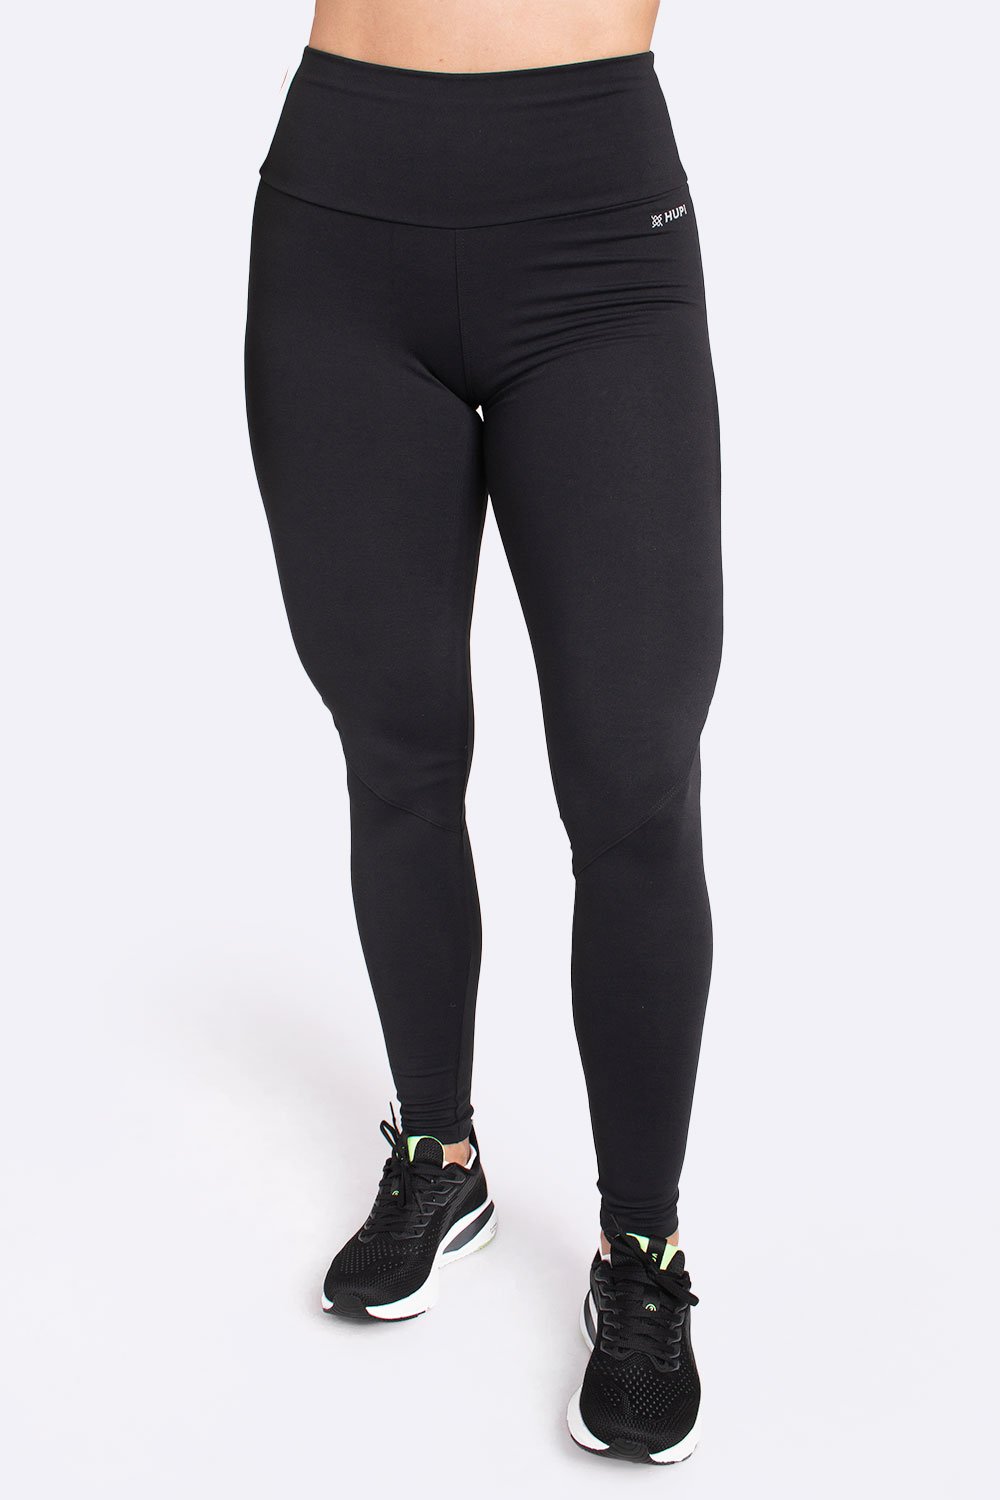 Nike, Yoga Pants Mens, Preto/Cinzento